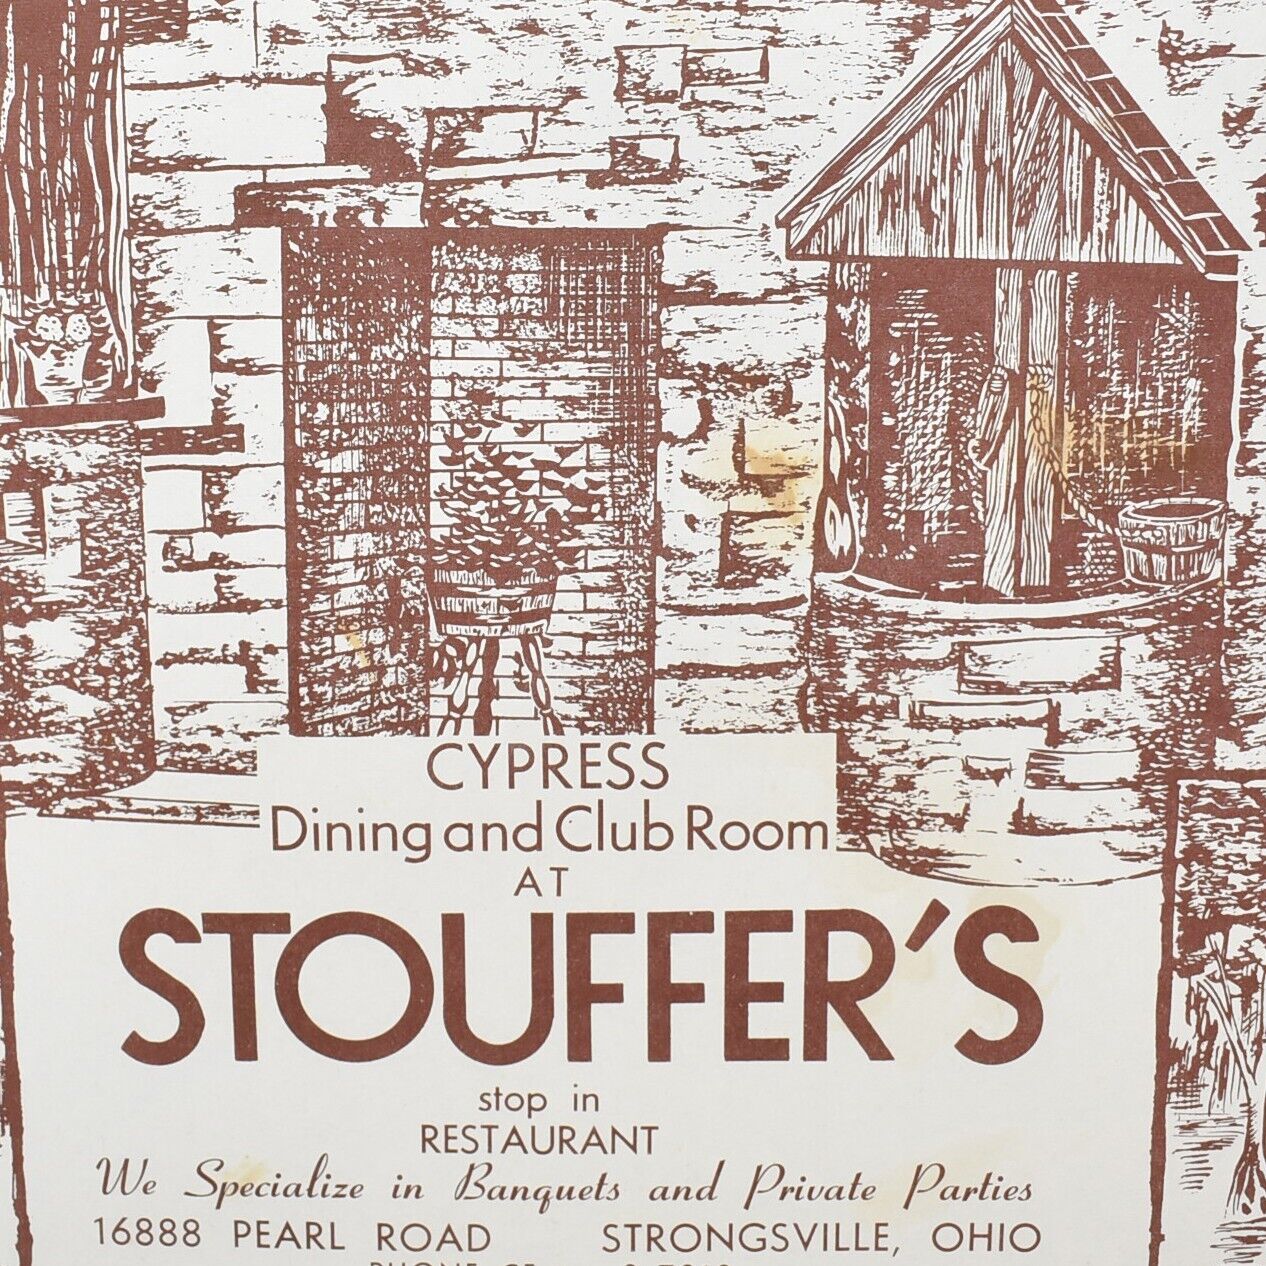 1950s Cypress Dining Club Restaurant Placemat Stouffer's Stop Inn Strongsville